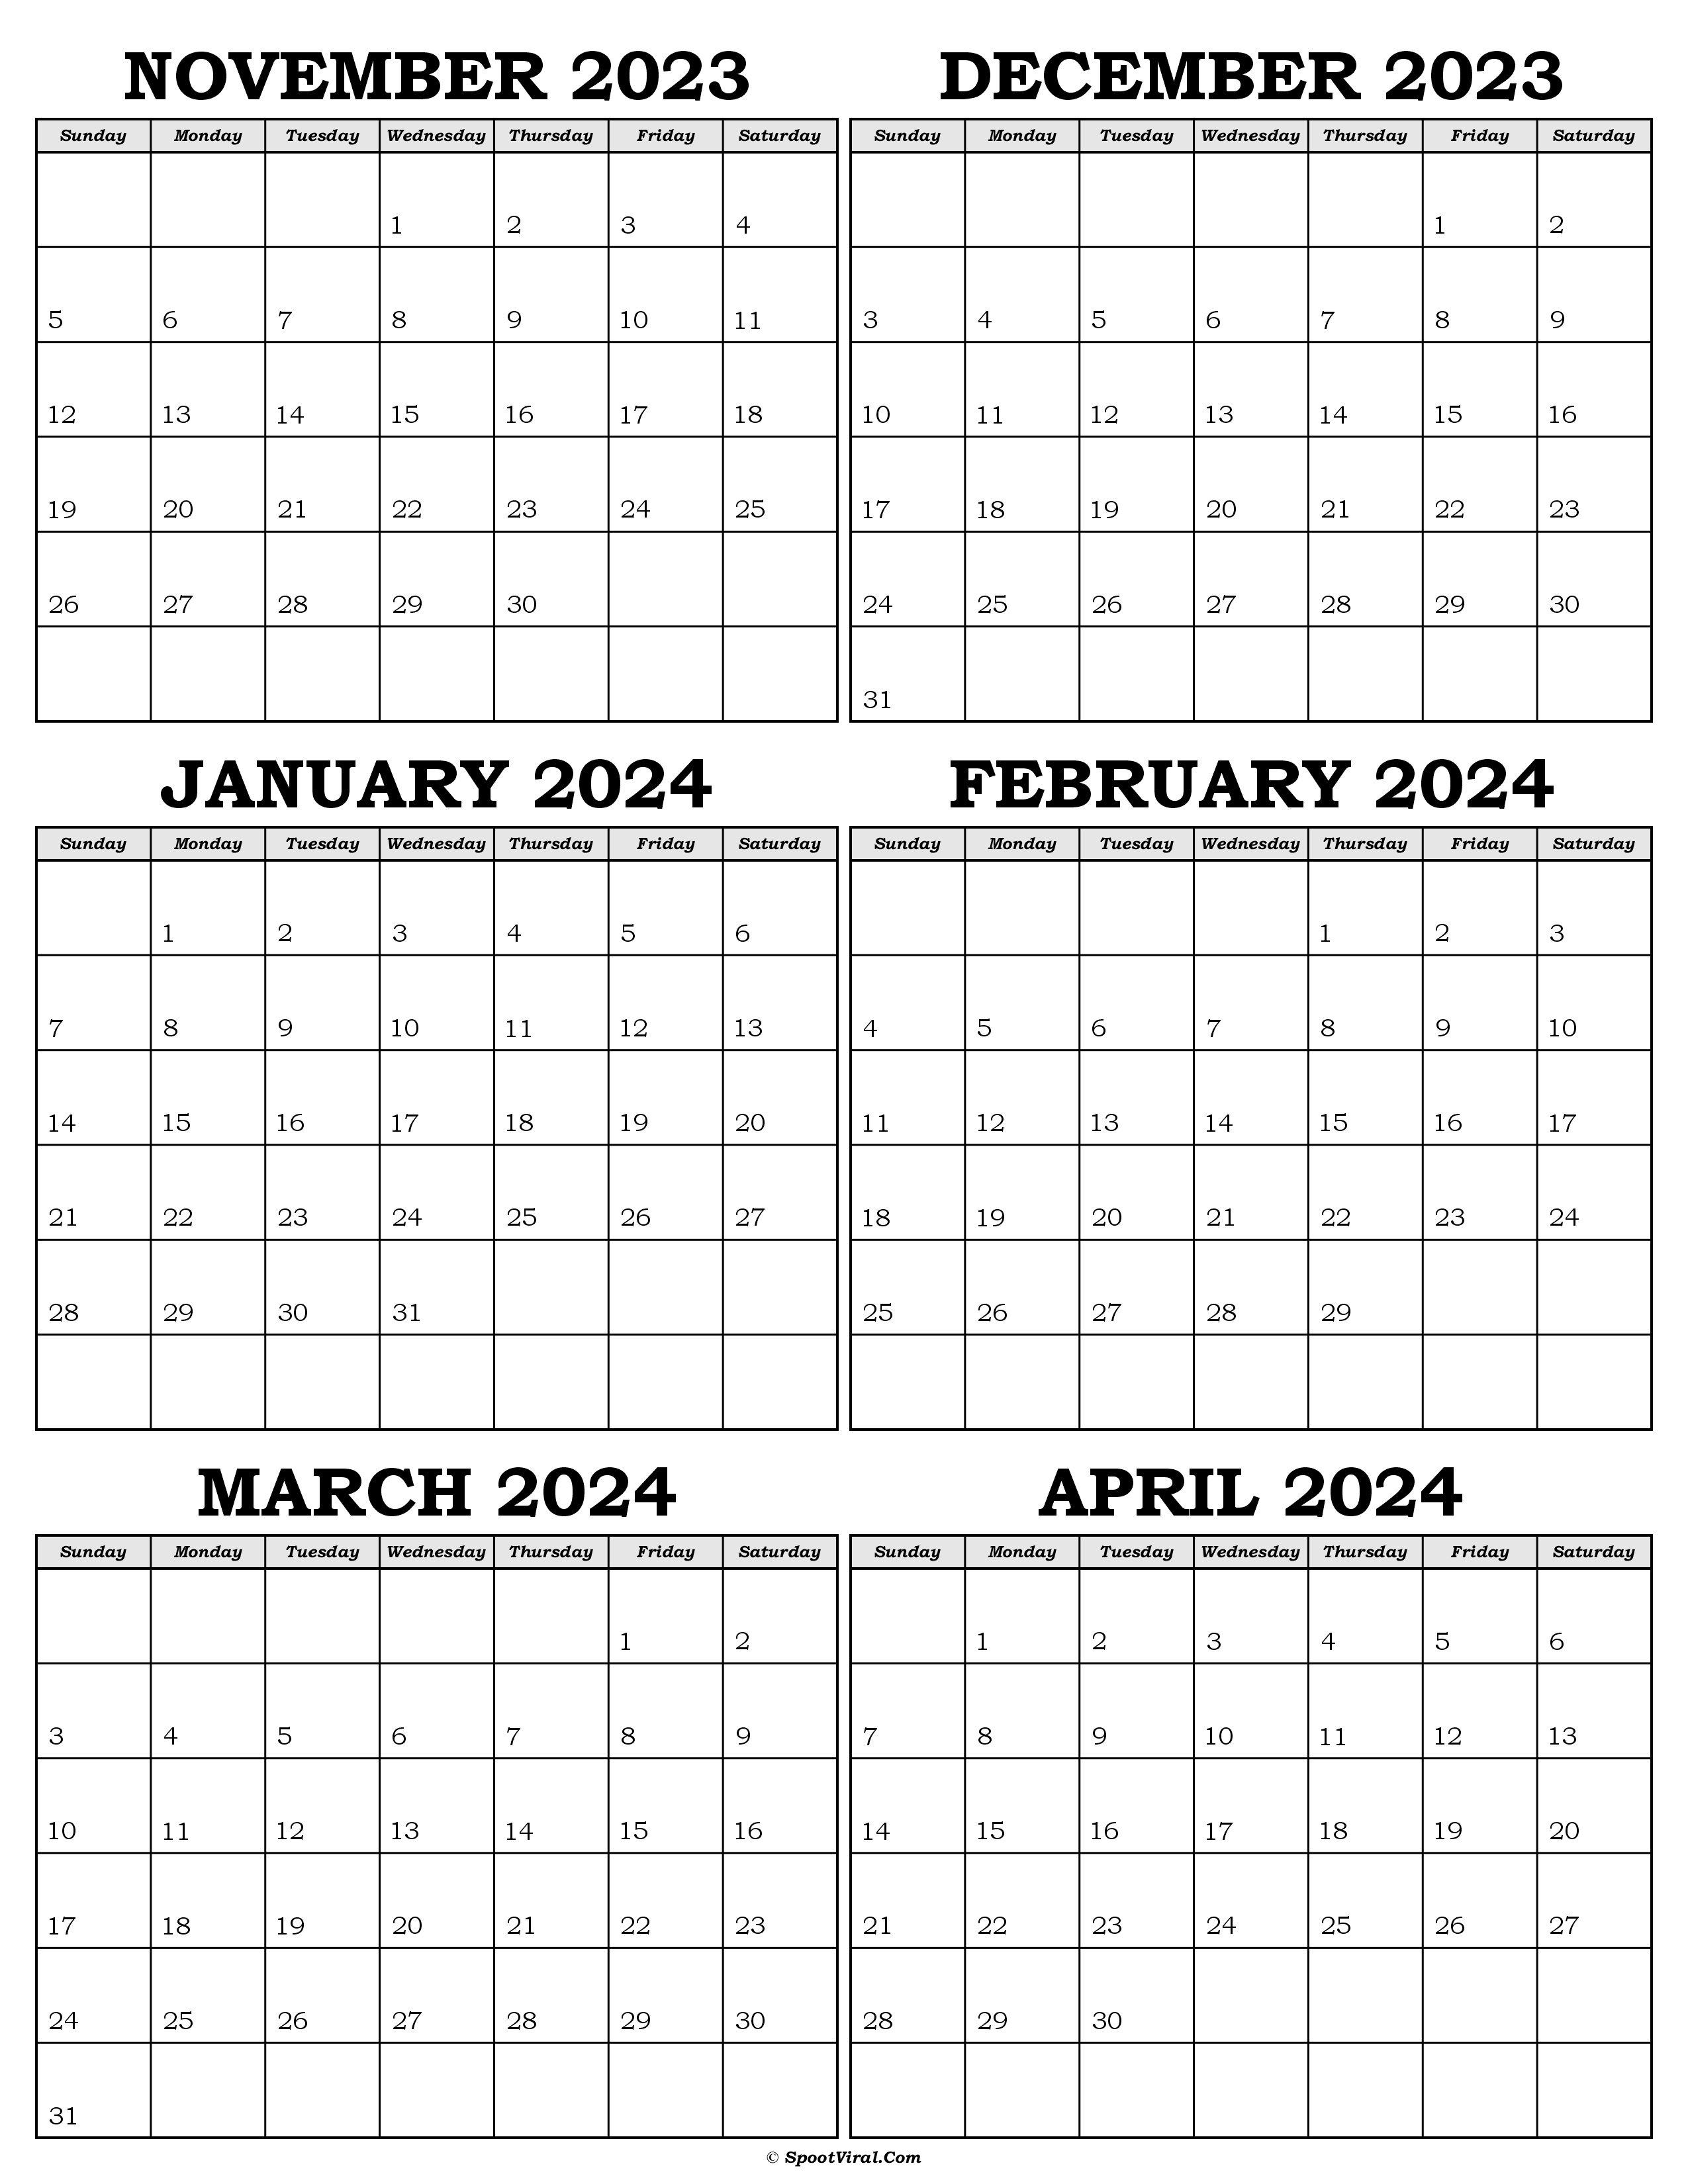 Calendar November 2023 to April 2024